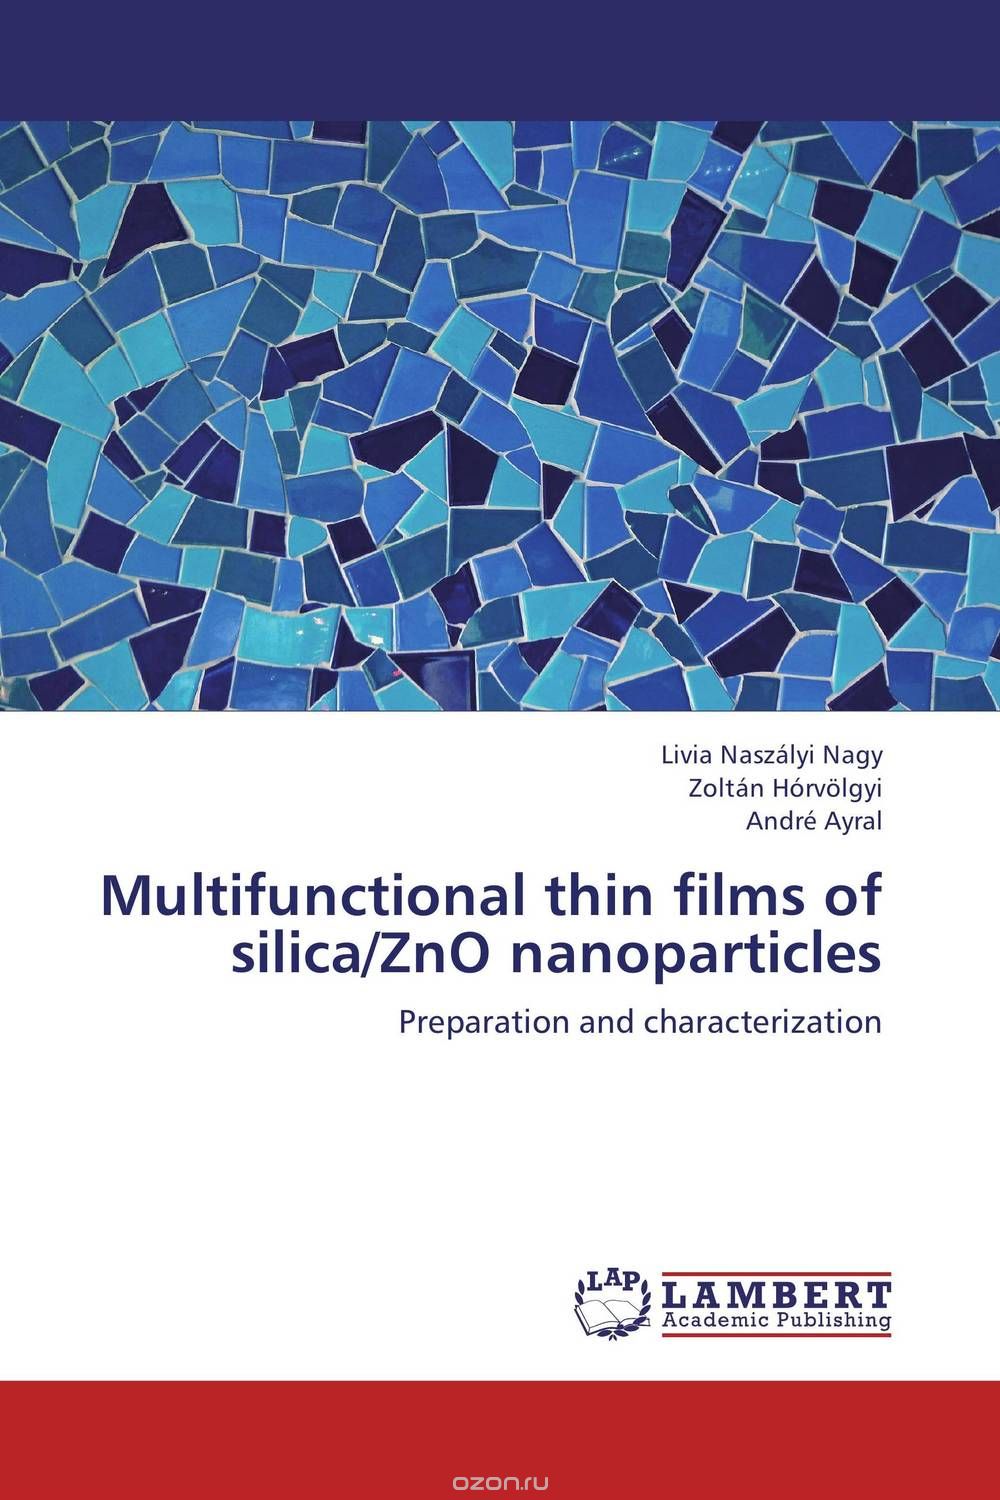 Скачать книгу "Multifunctional thin films of silica/ZnO nanoparticles"